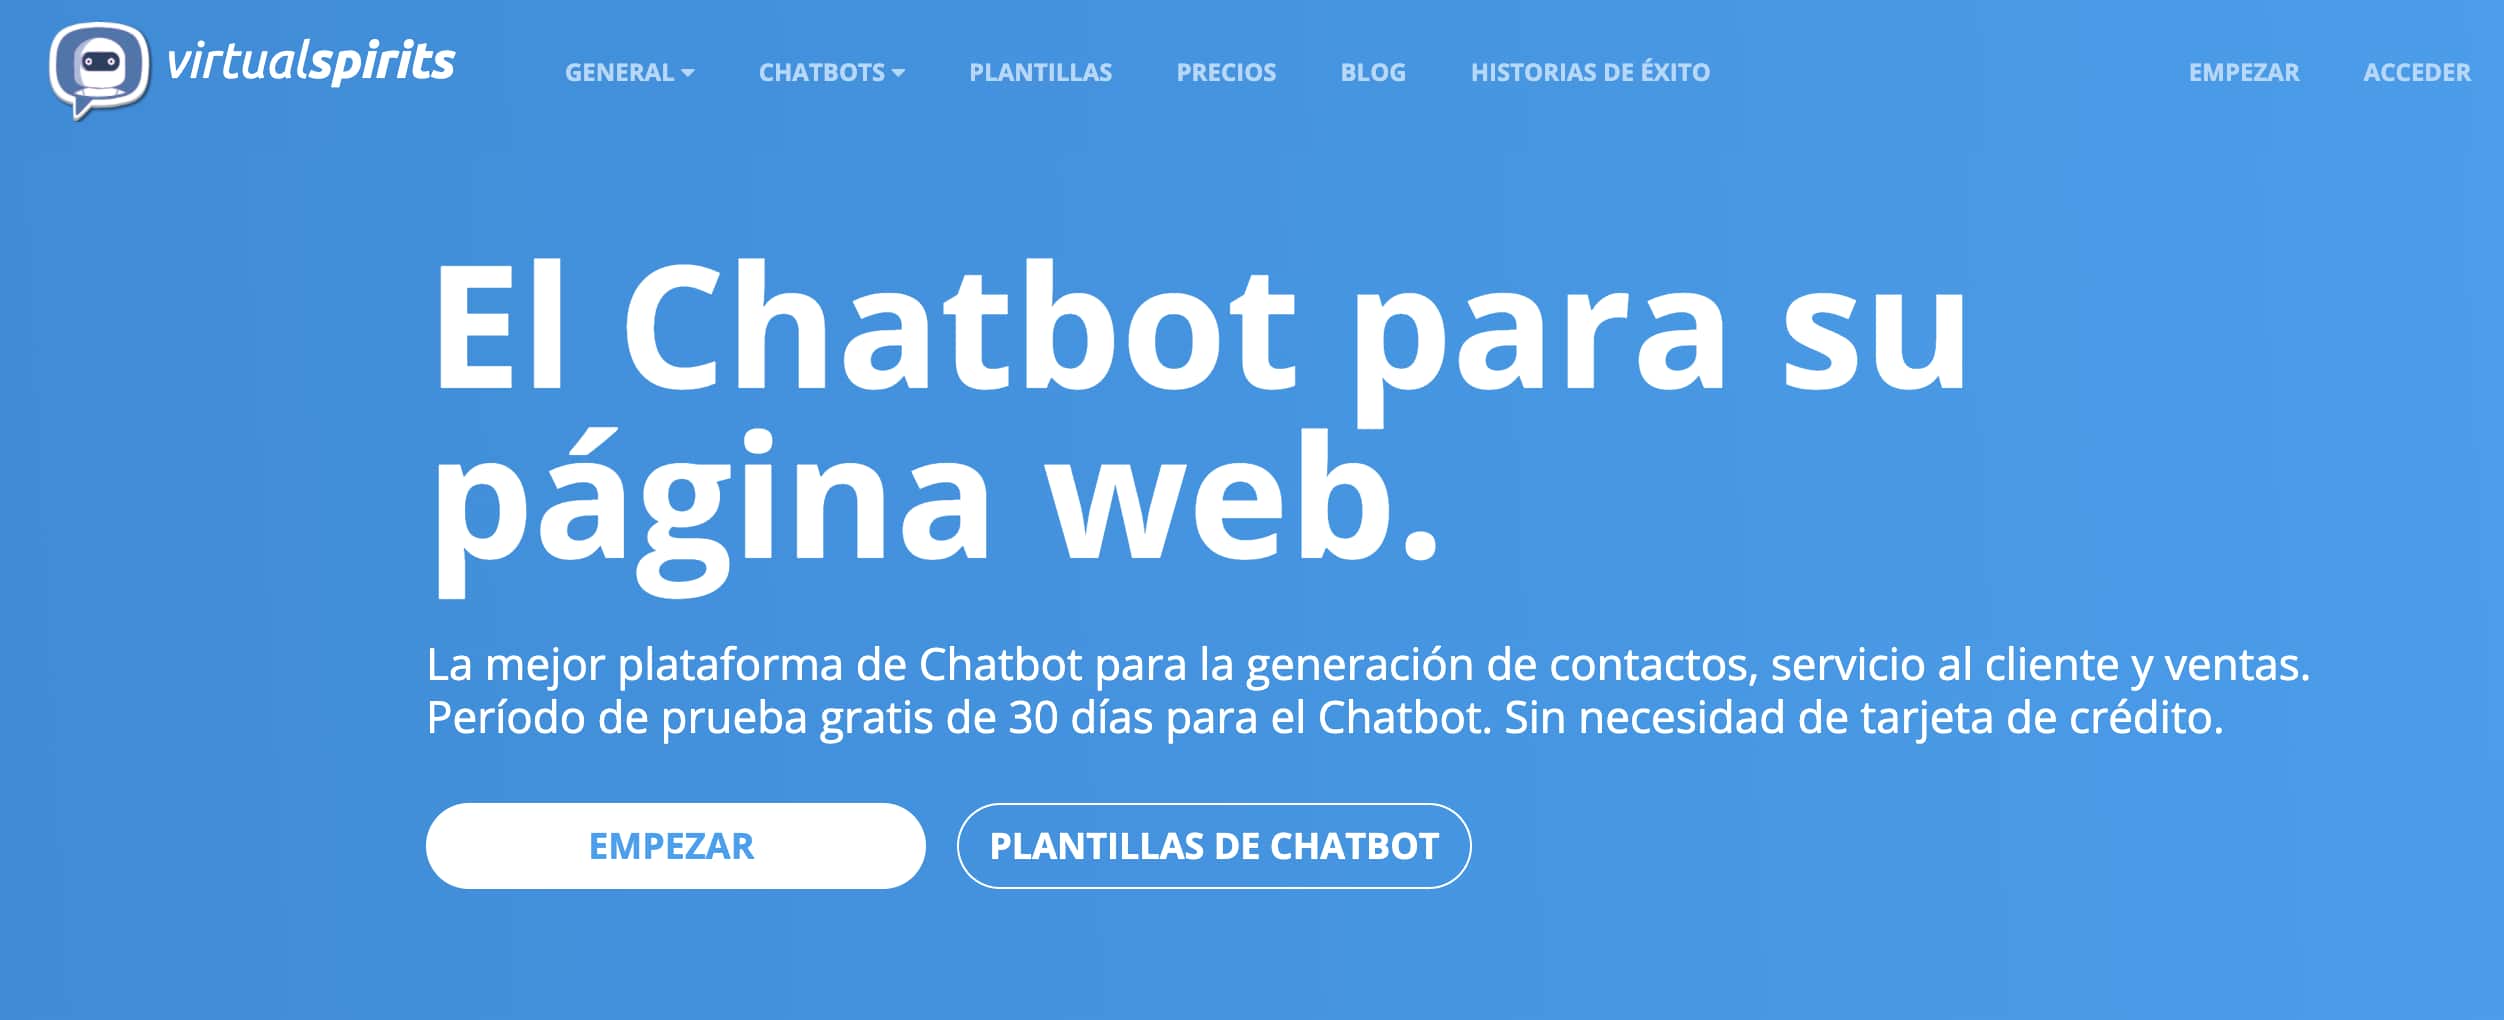 Mejores chatbots en español: VirtualSpirits